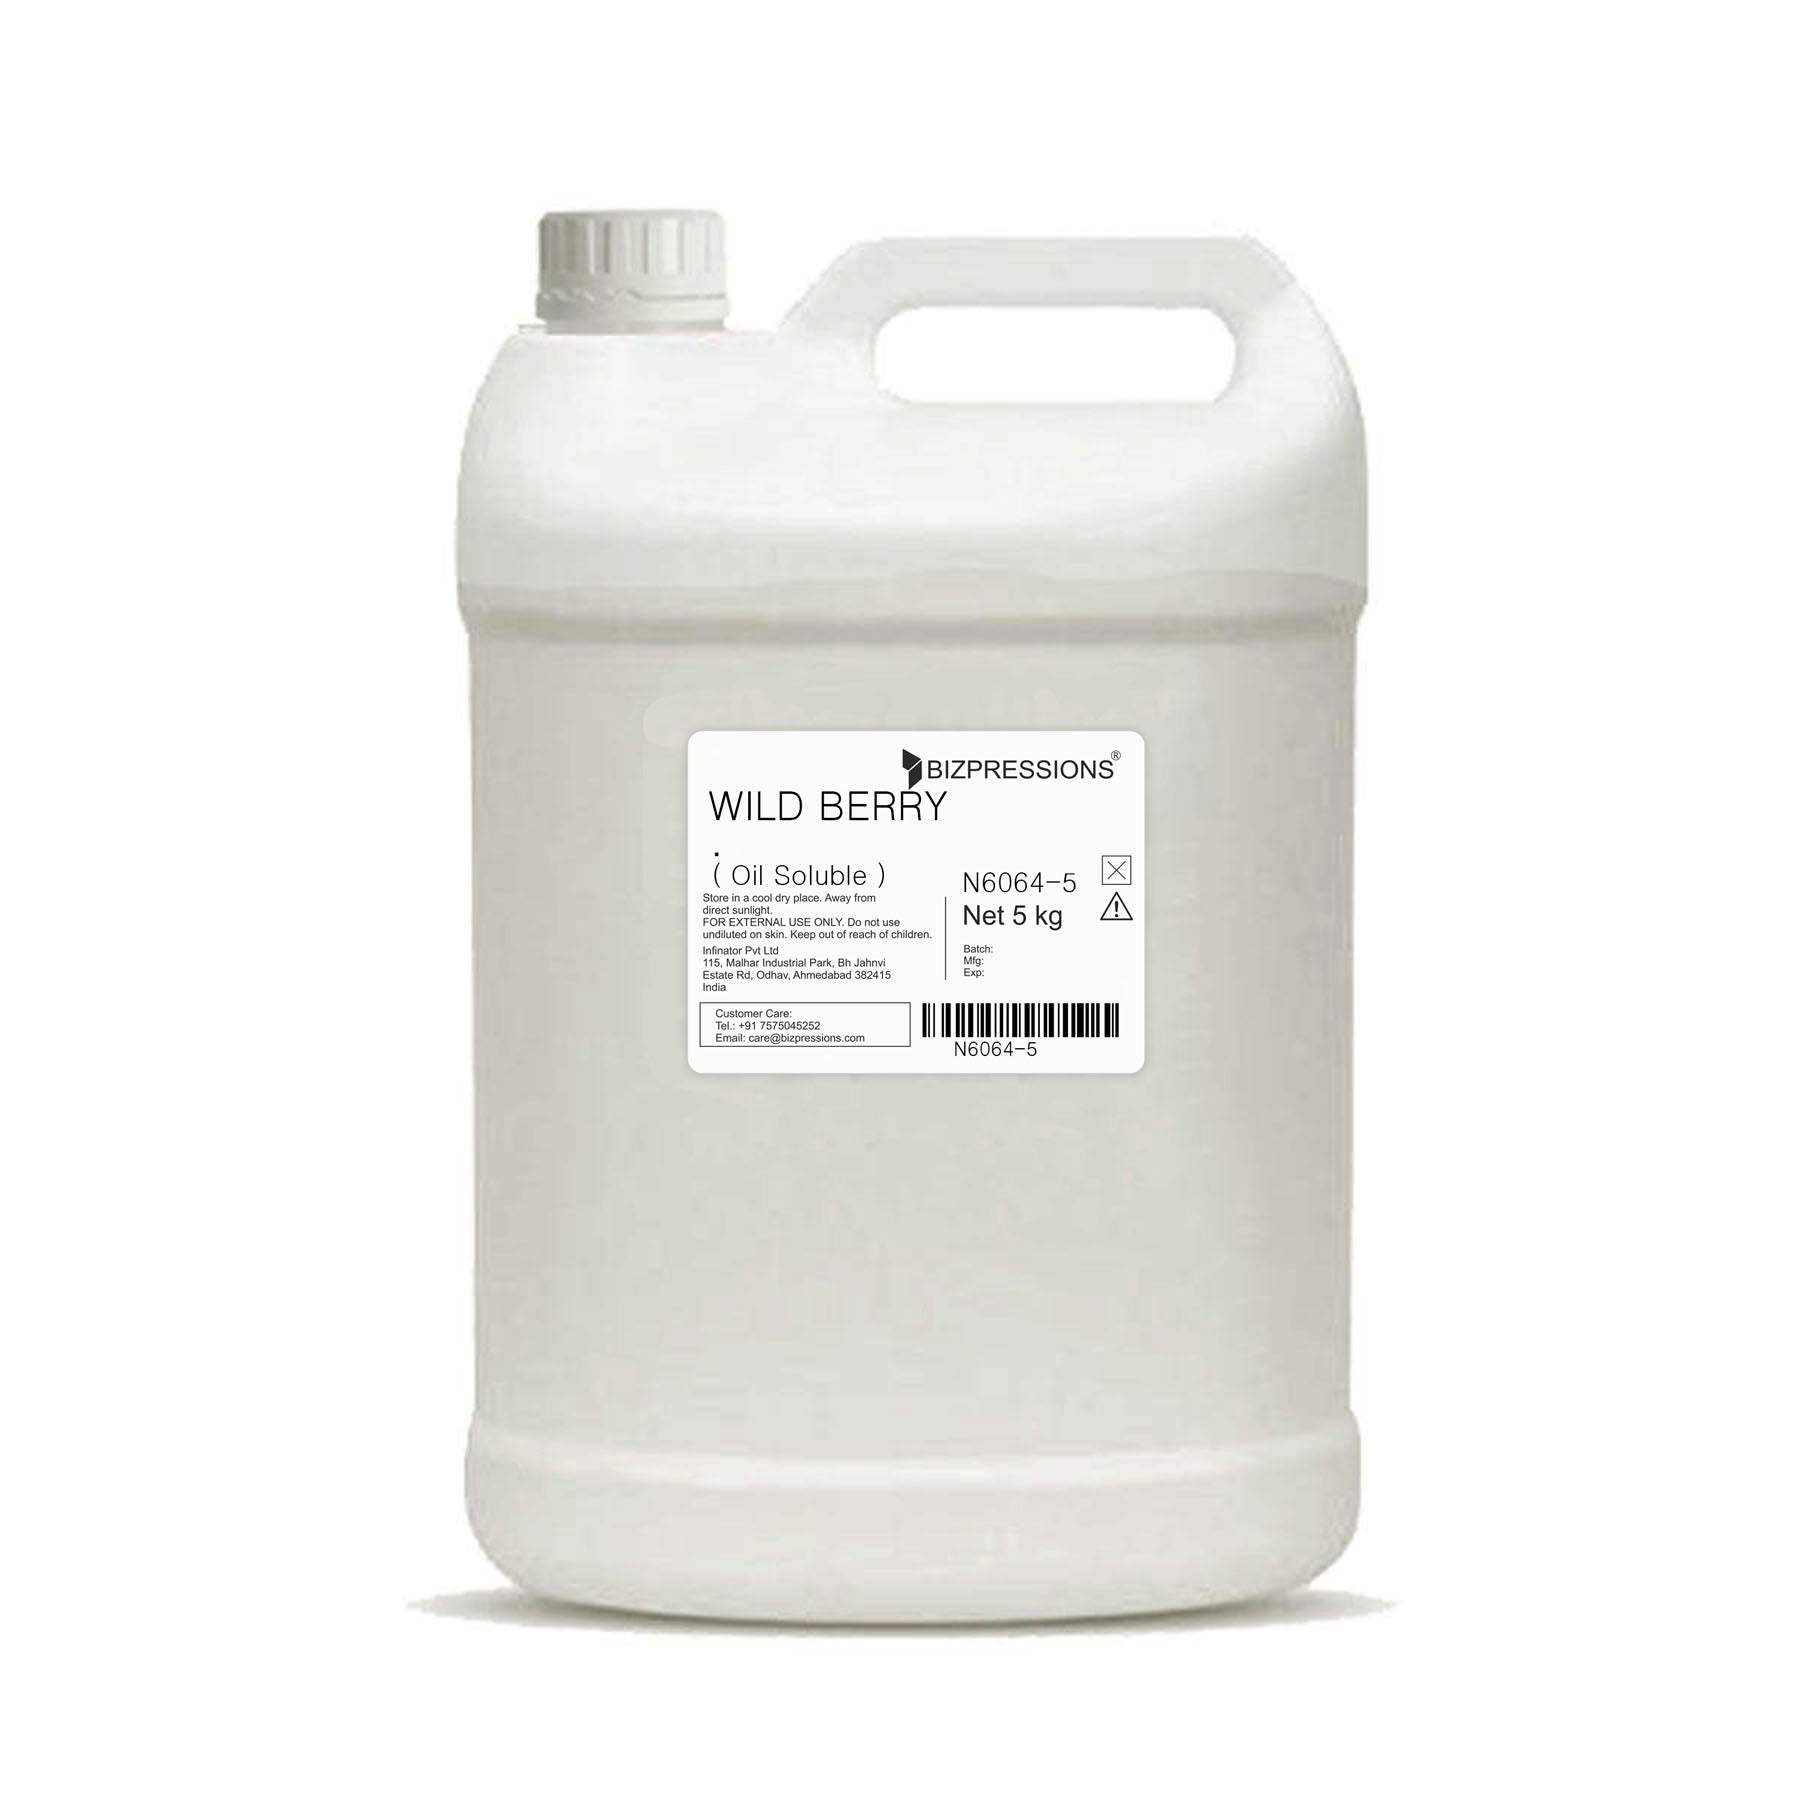 WILD BERRY - Fragrance ( Oil Soluble ) - 5 kg